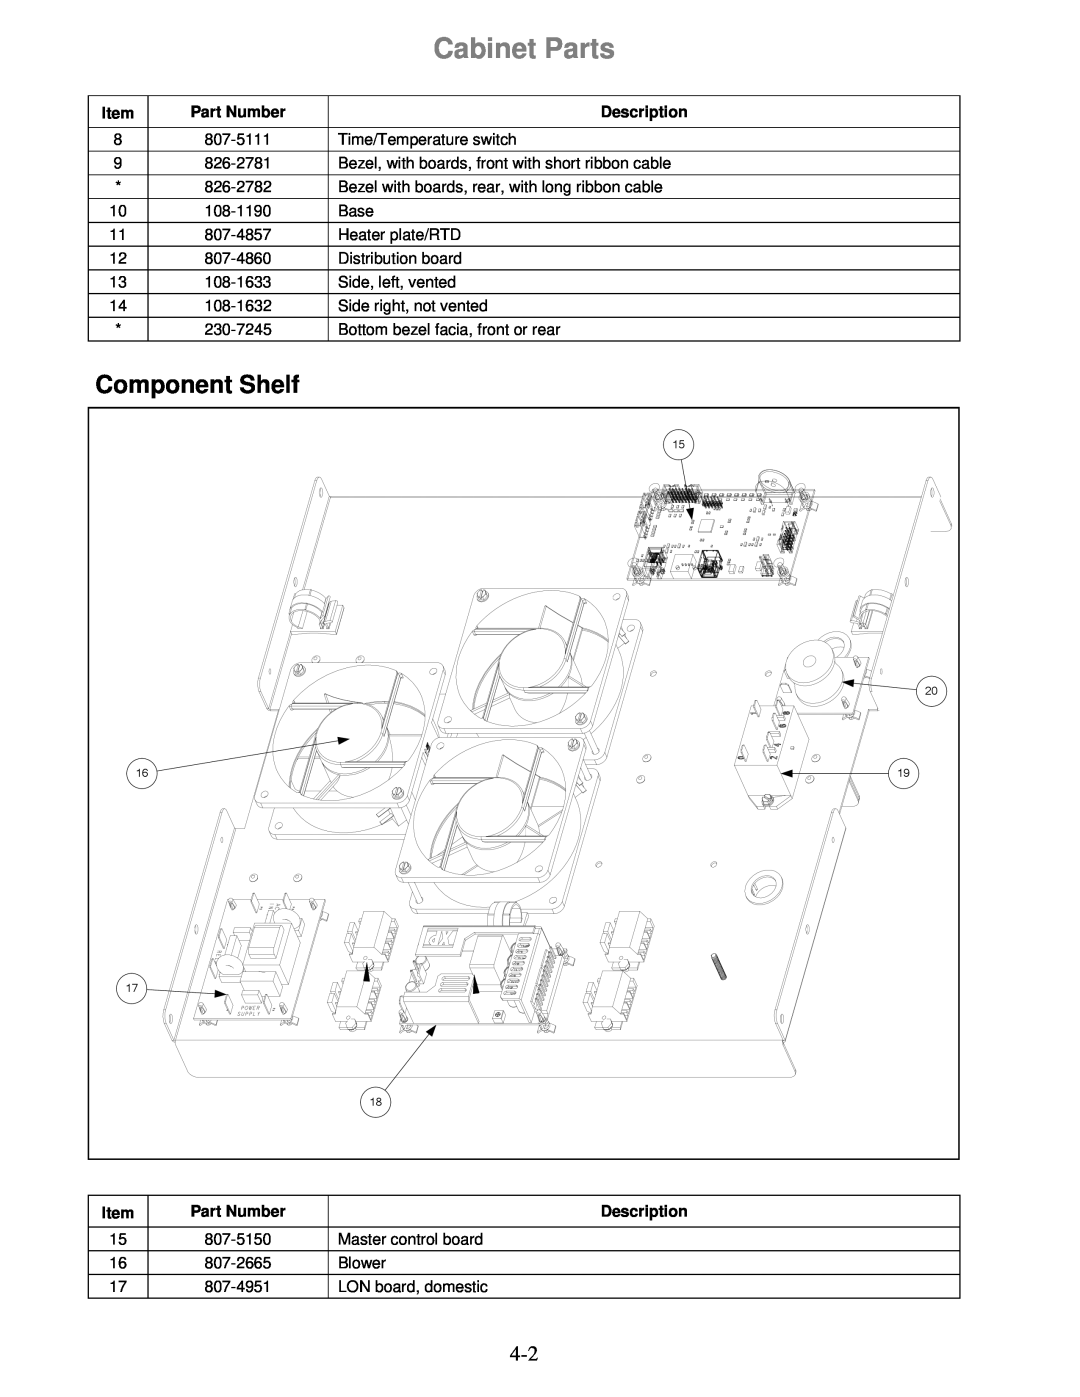 Frymaster 8196606 manual Component Shelf, Cabinet Parts, Item, Part Number, Description 